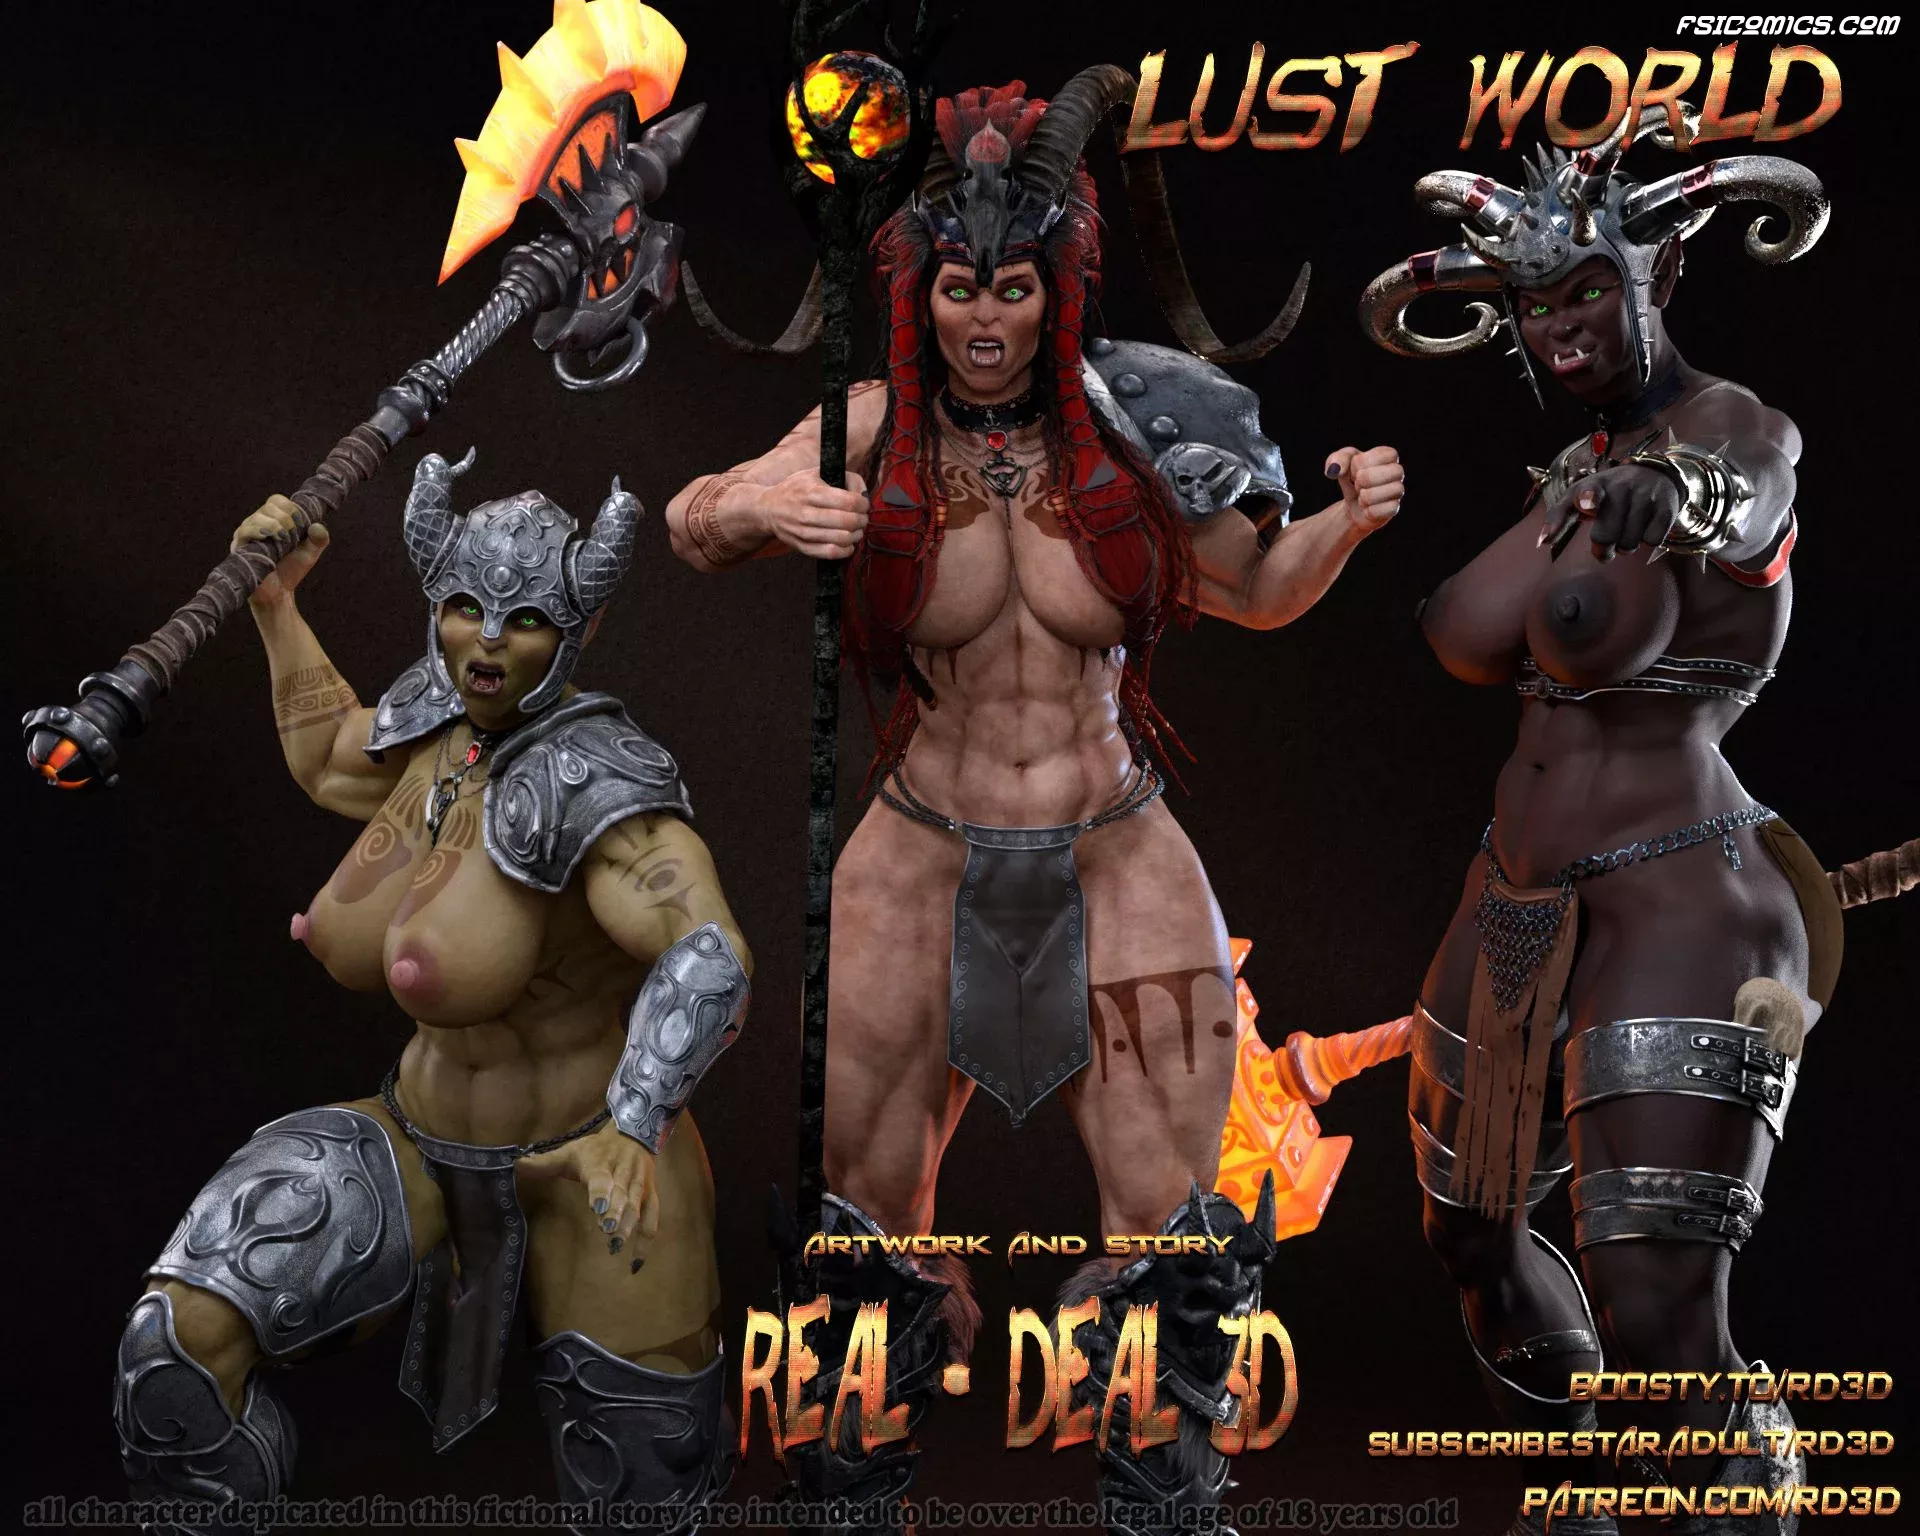 Lust World Chapter 1 - Real Deal 3D - 3 - FSIComics